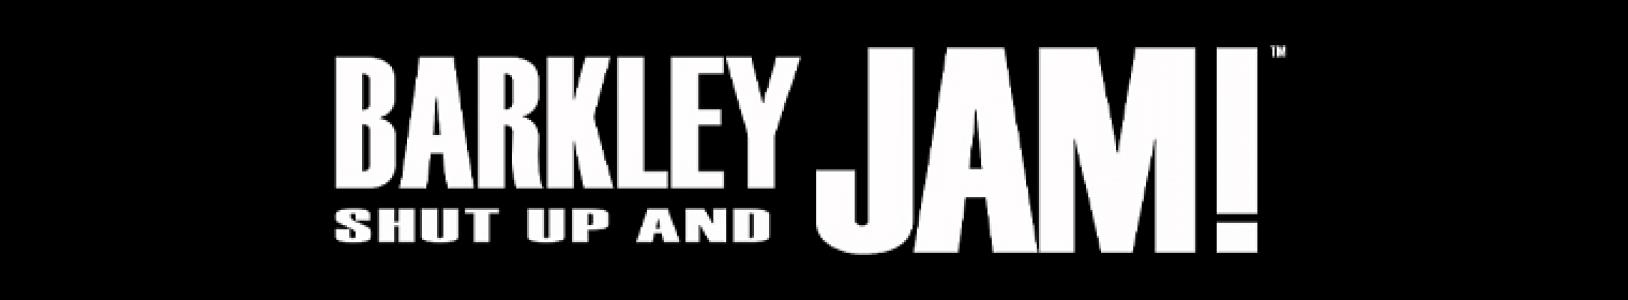 Barkley: Shut Up and Jam! banner